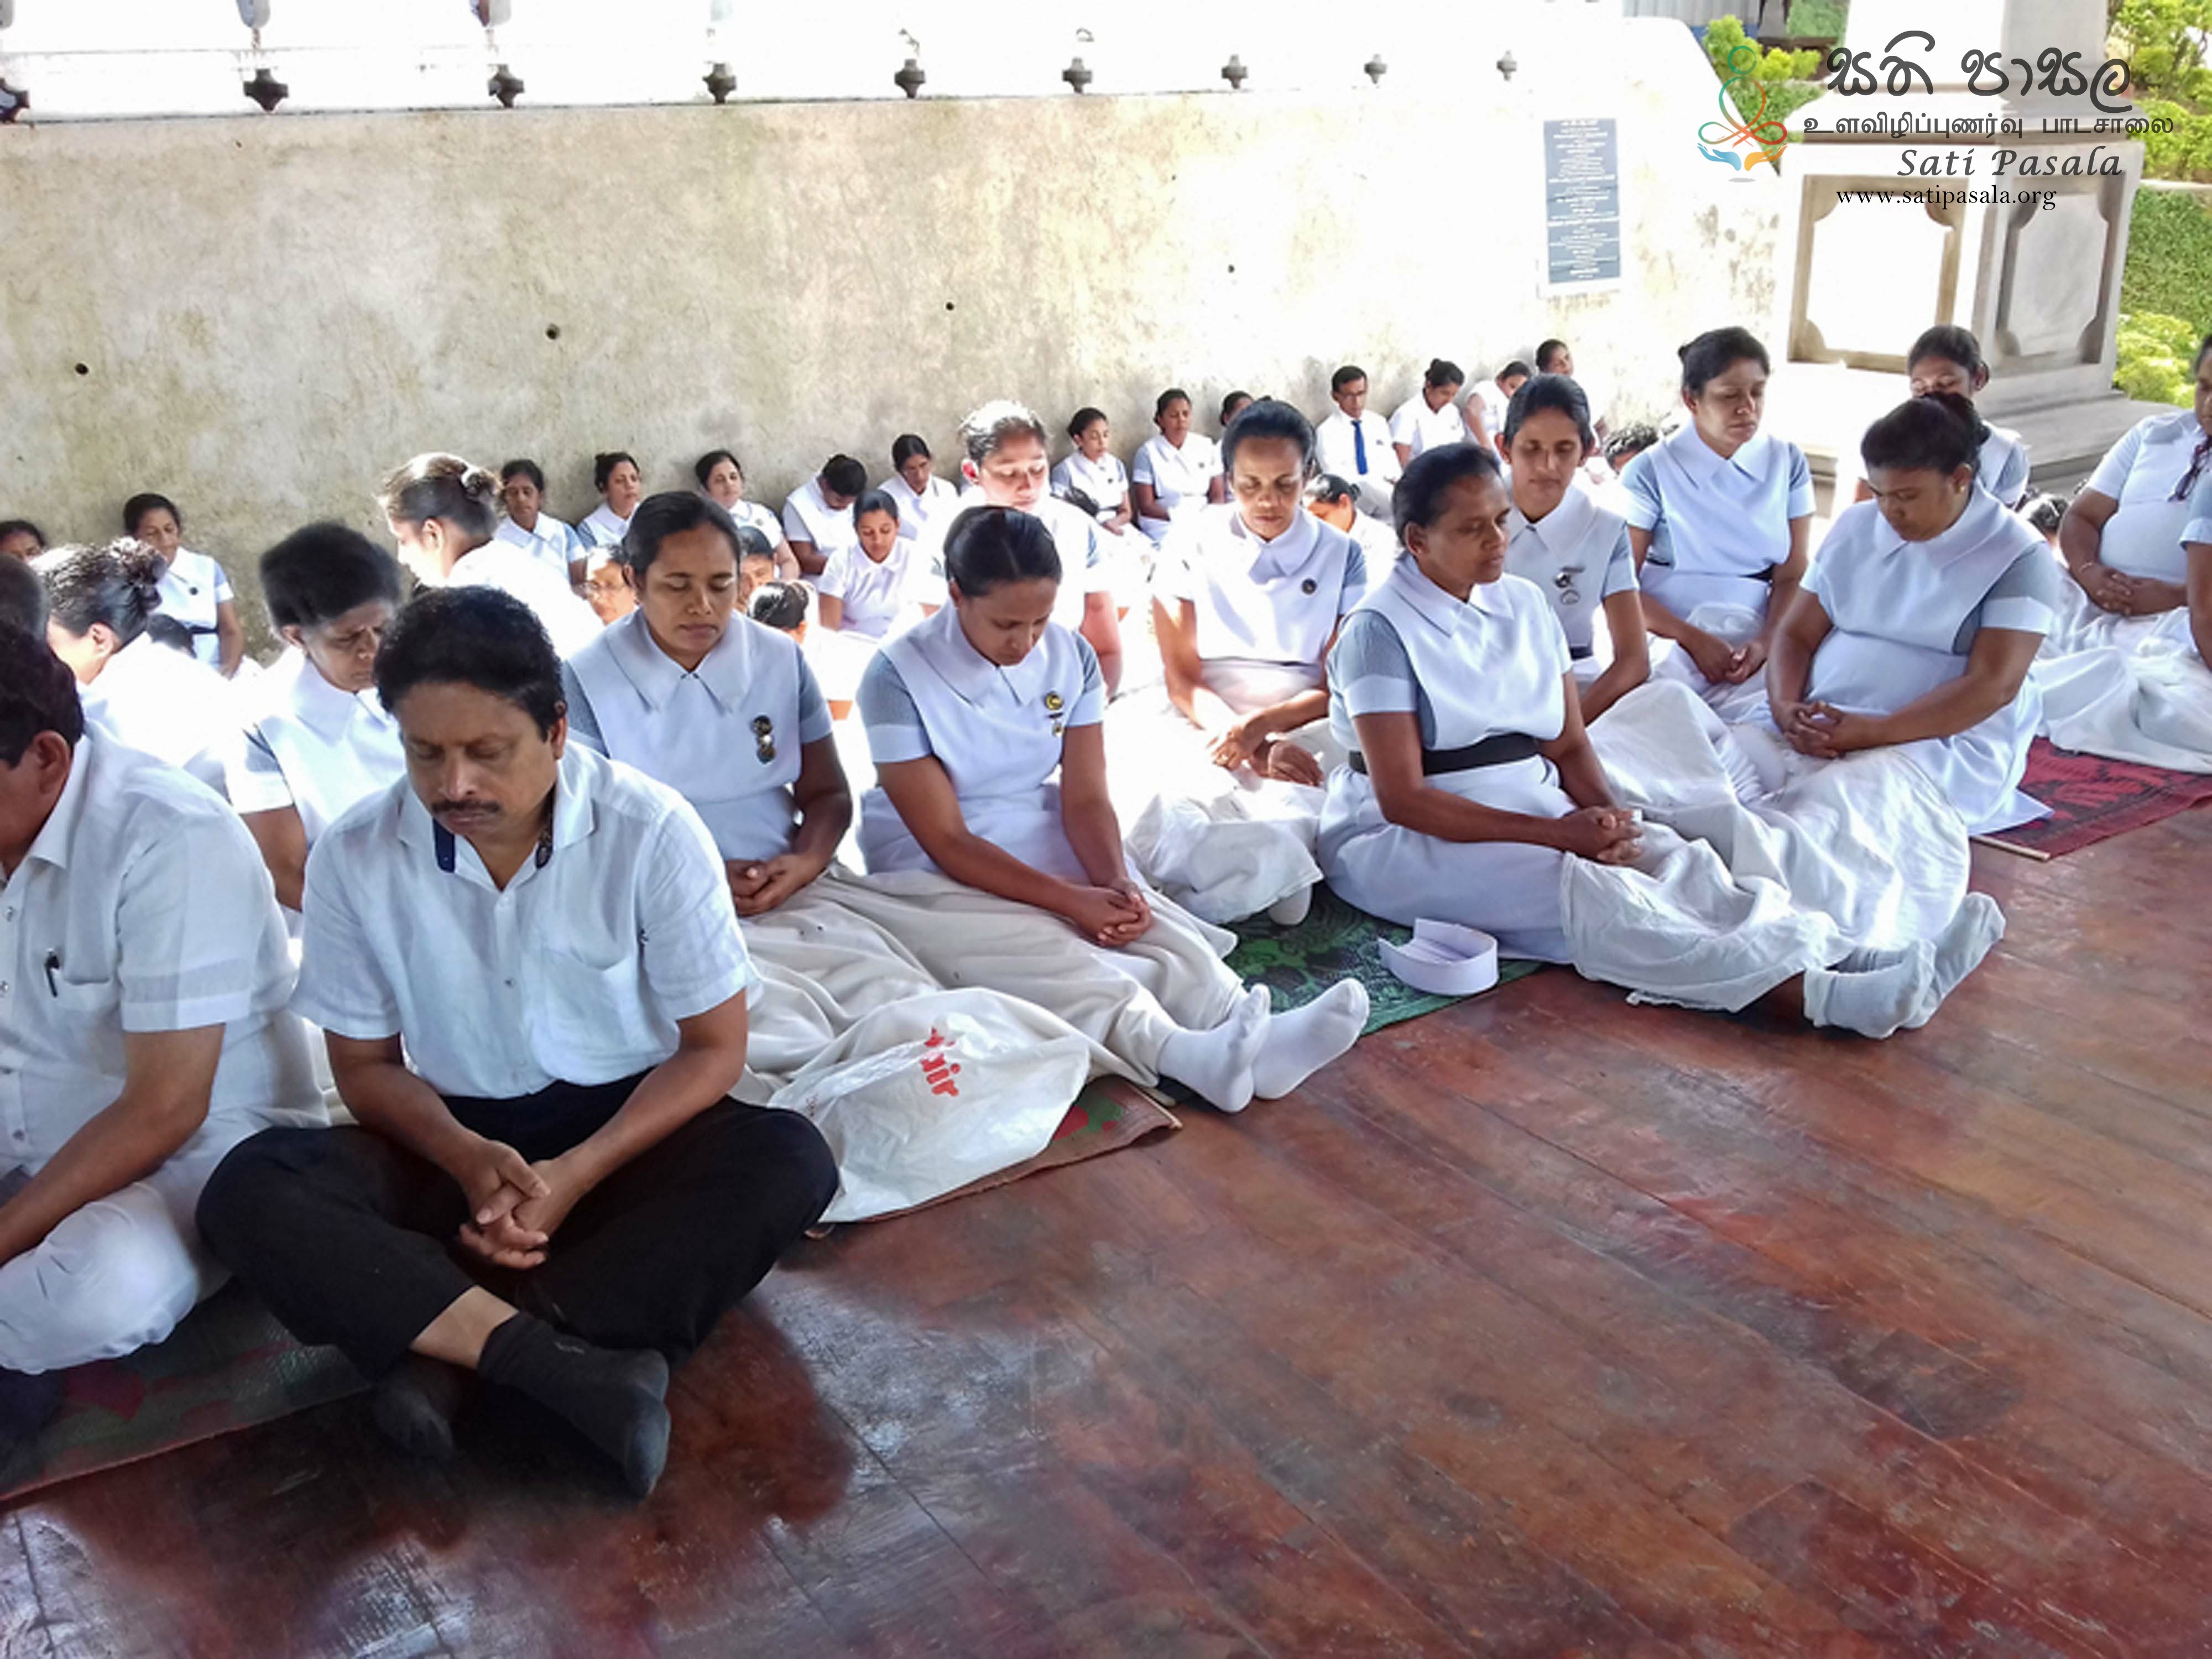 Sati Pasala Mindfulness Programme at Kandy General Hospital